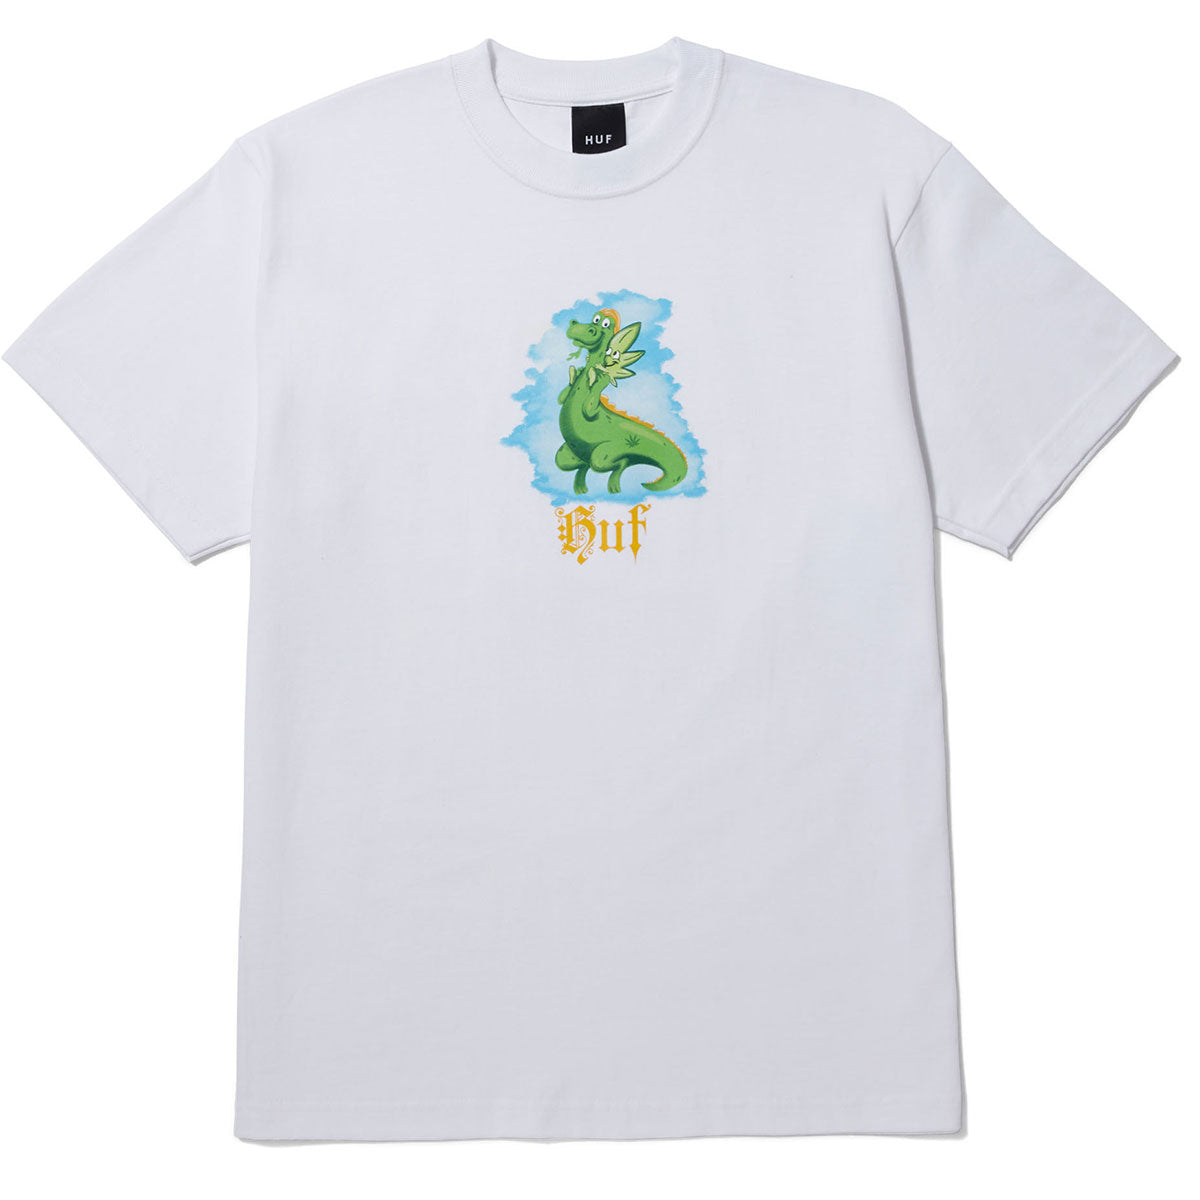 HUF Fairy Tale T-Shirt - White image 1